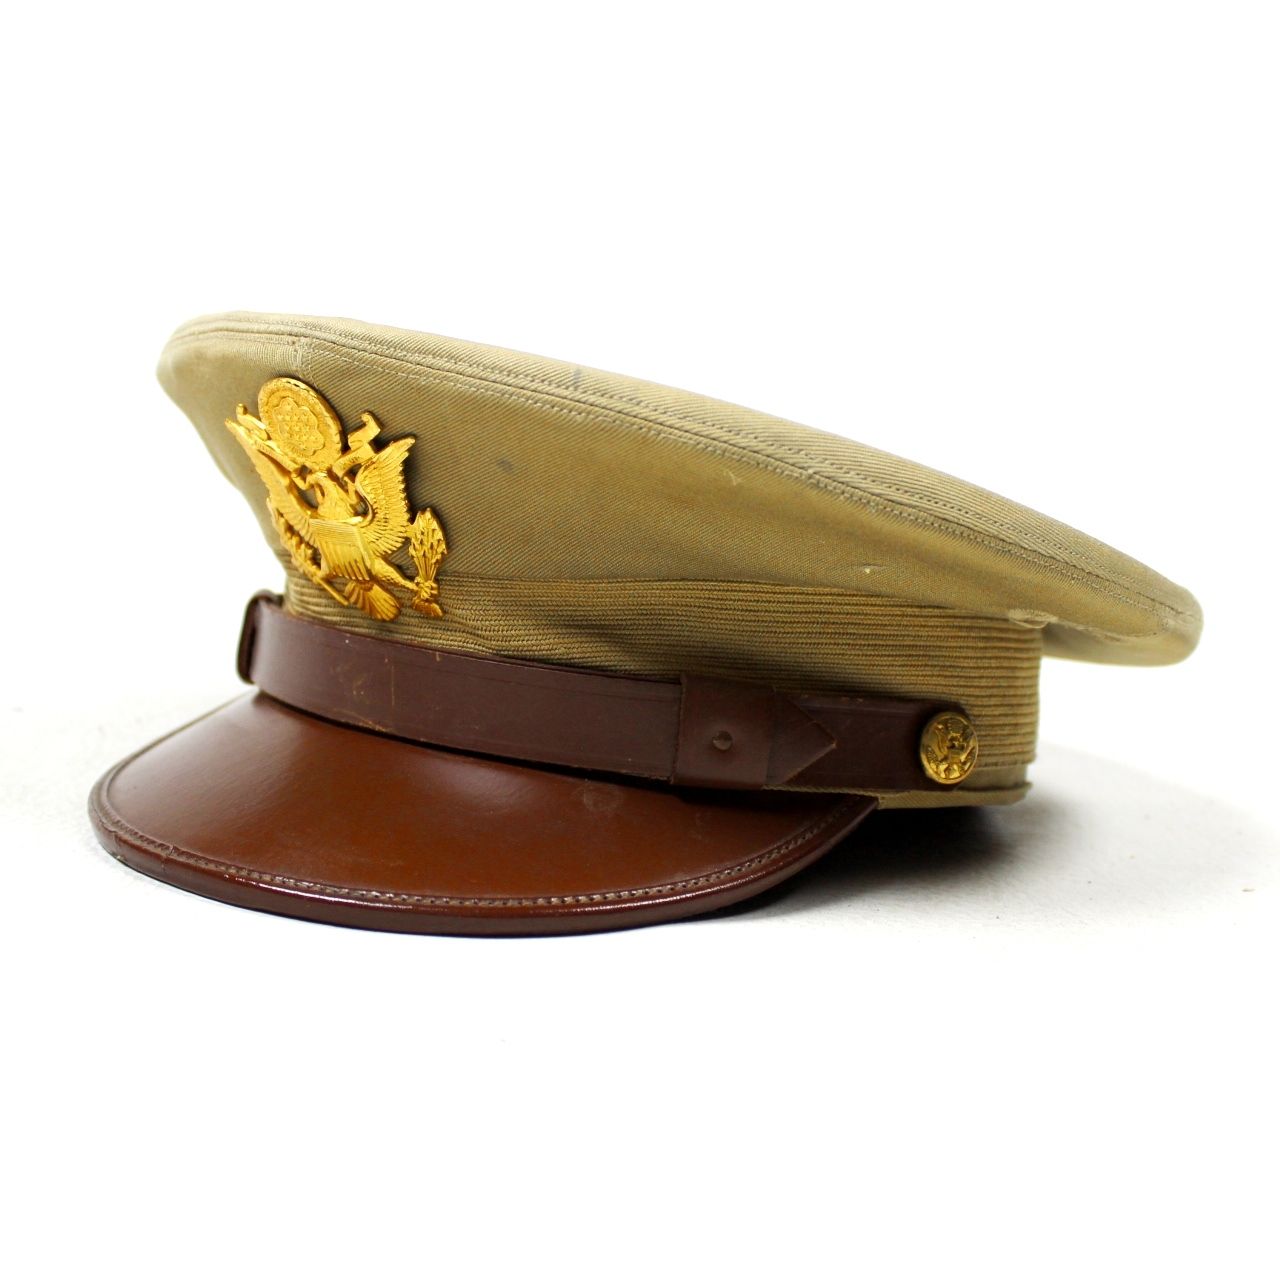 ORIGINAL WWII US ARMY OFFICERS KHAKI TAN COTTON DRESS VISOR CAP HAT - SIZE 7